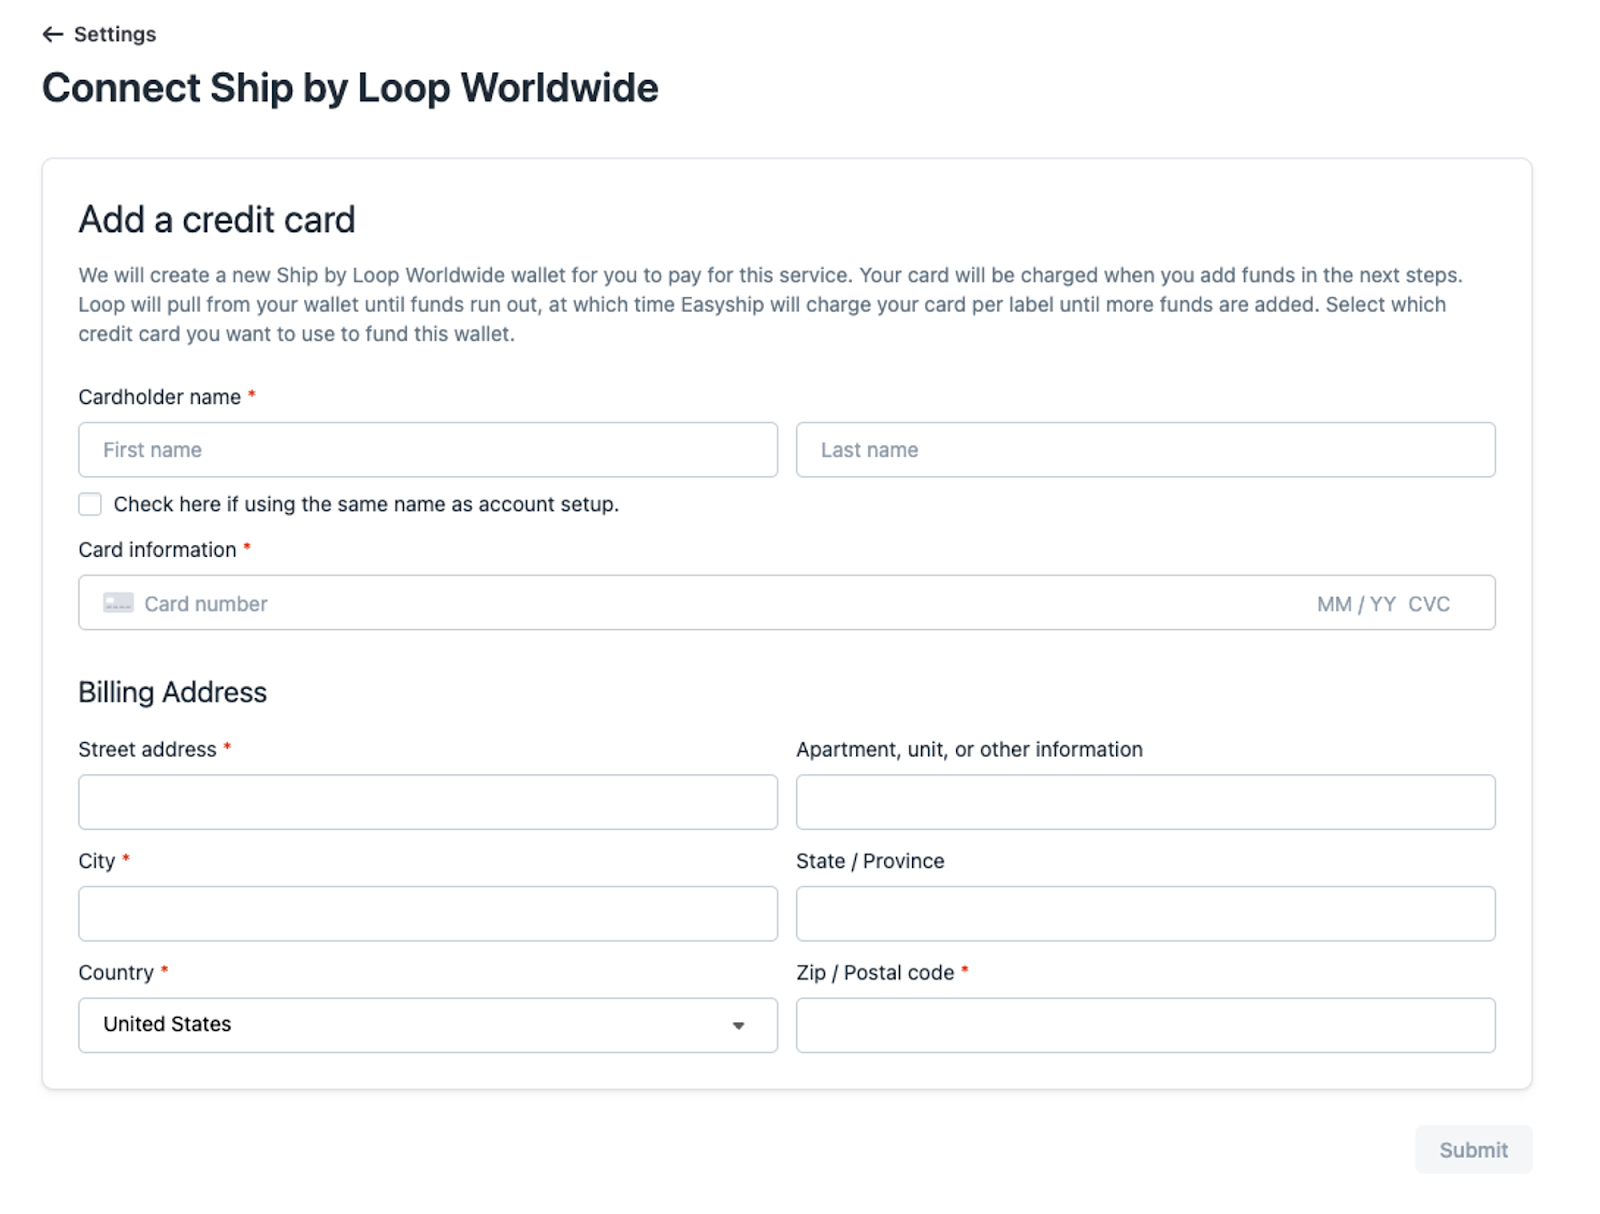 Ship by Loop Worldwide credit card setup view.